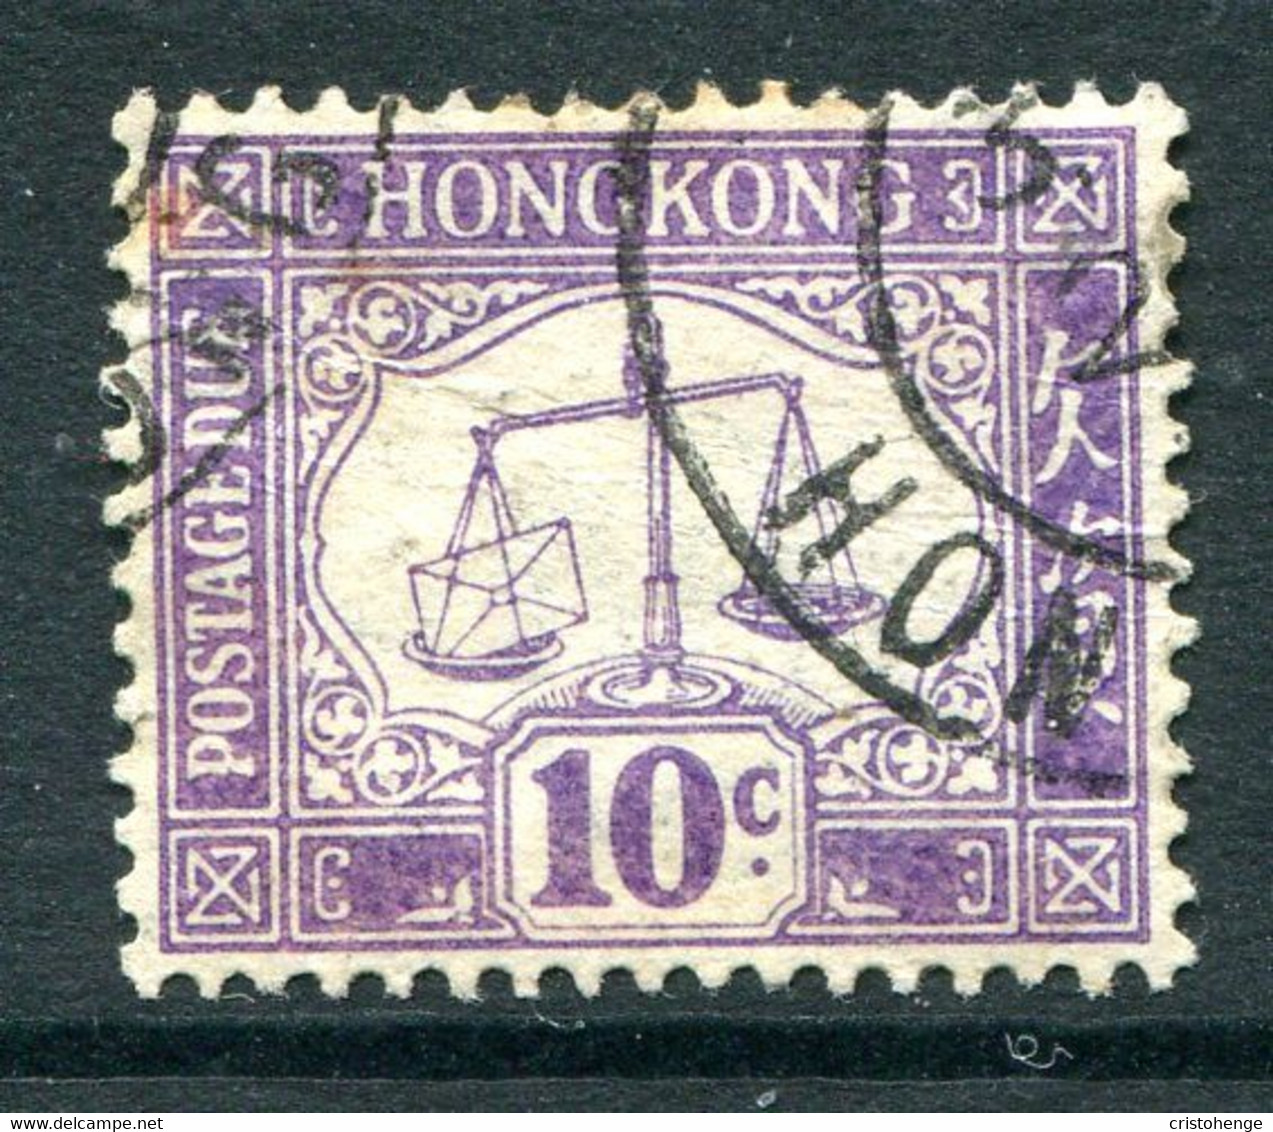 Hong Kong 1938-63 Postage Dues - 10c Violet Used (SG D10) - Postage Due